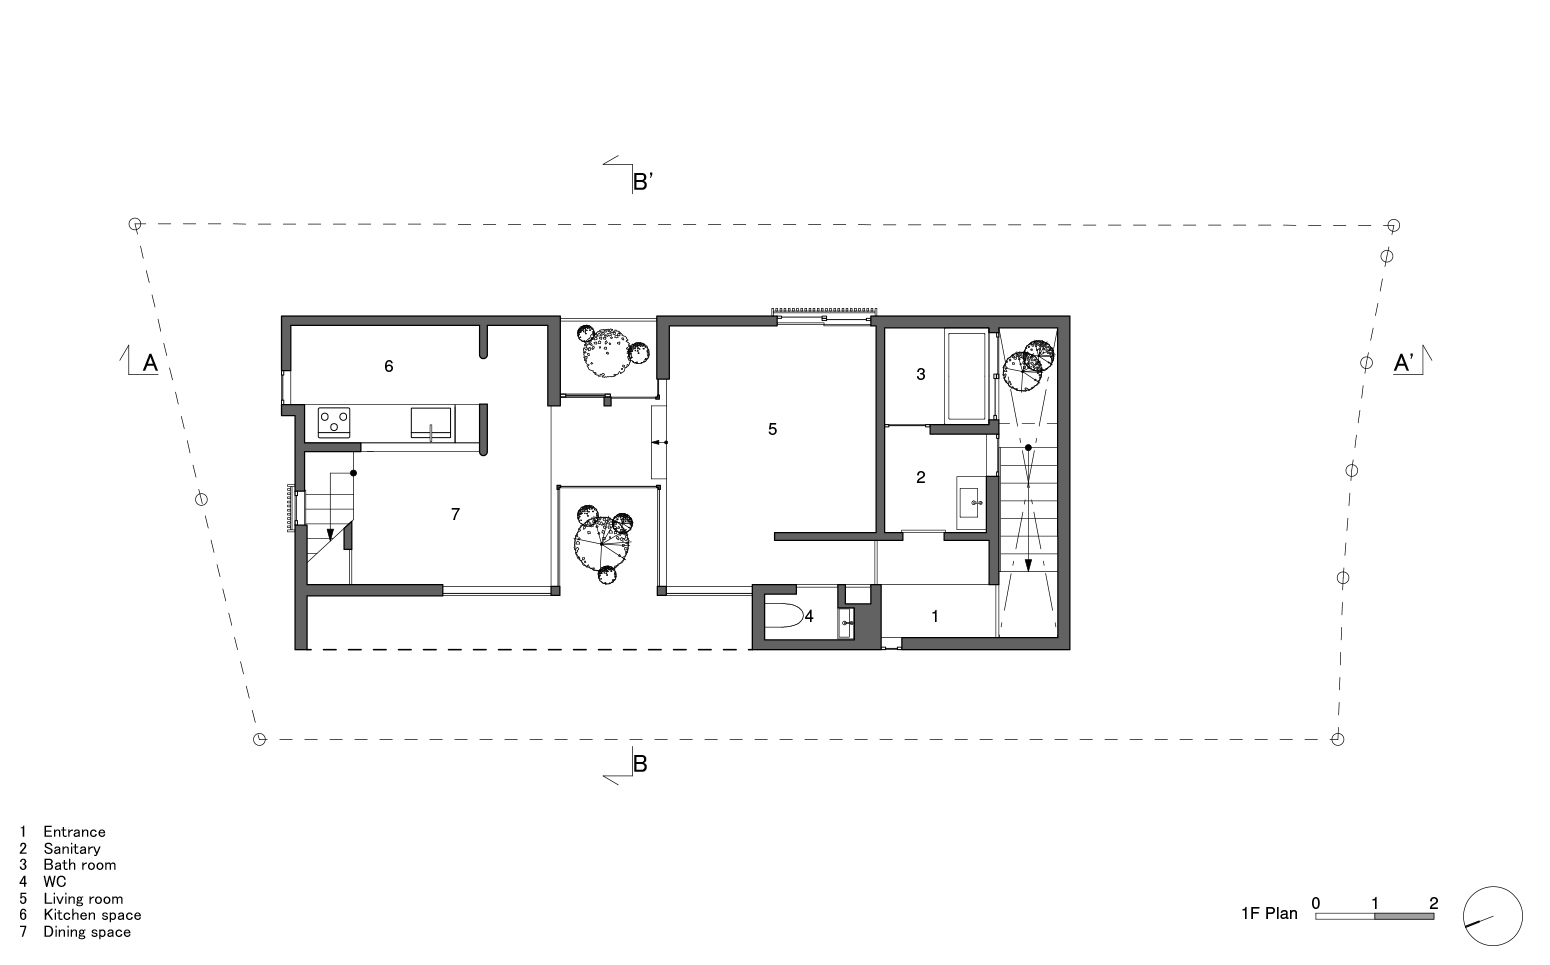 FujiwaraMuro Architects,日本,住宅设计,114㎡,国外住宅设计案例,极简风格,大阪,独栋住宅,日式风格